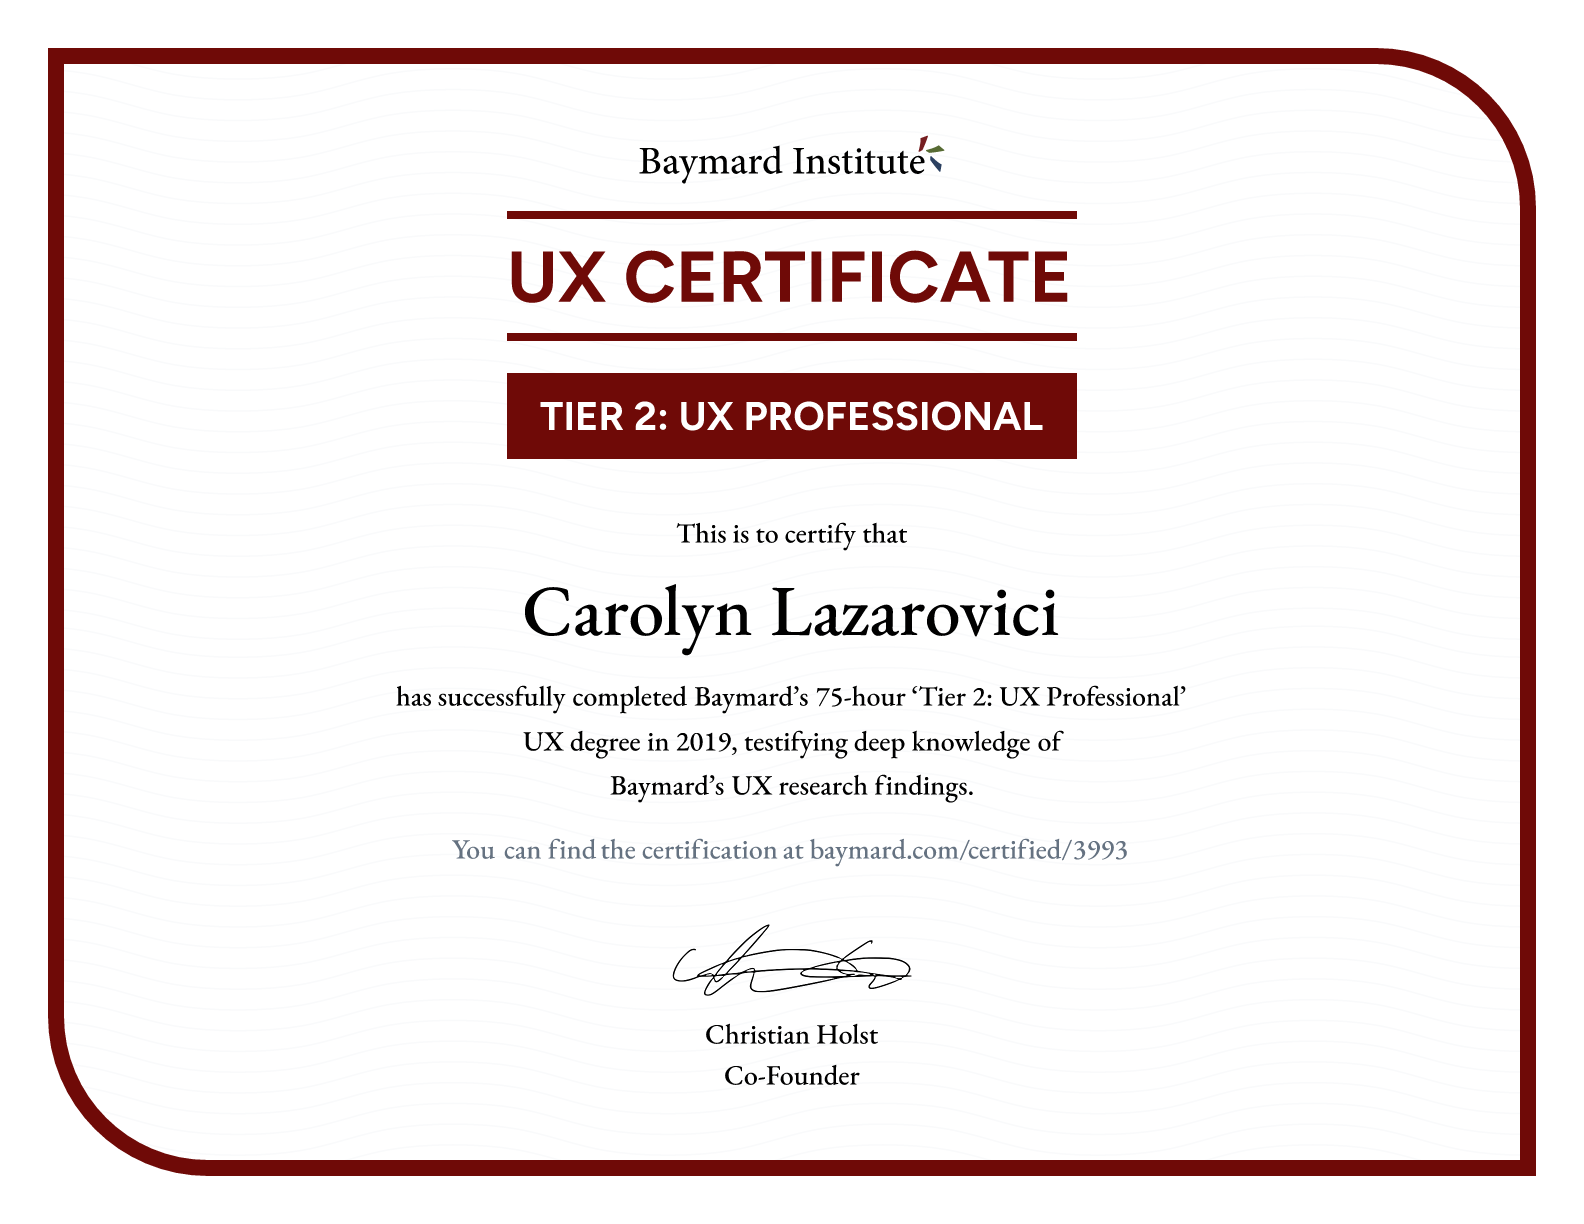 Carolyn Lazarovici’s certificate